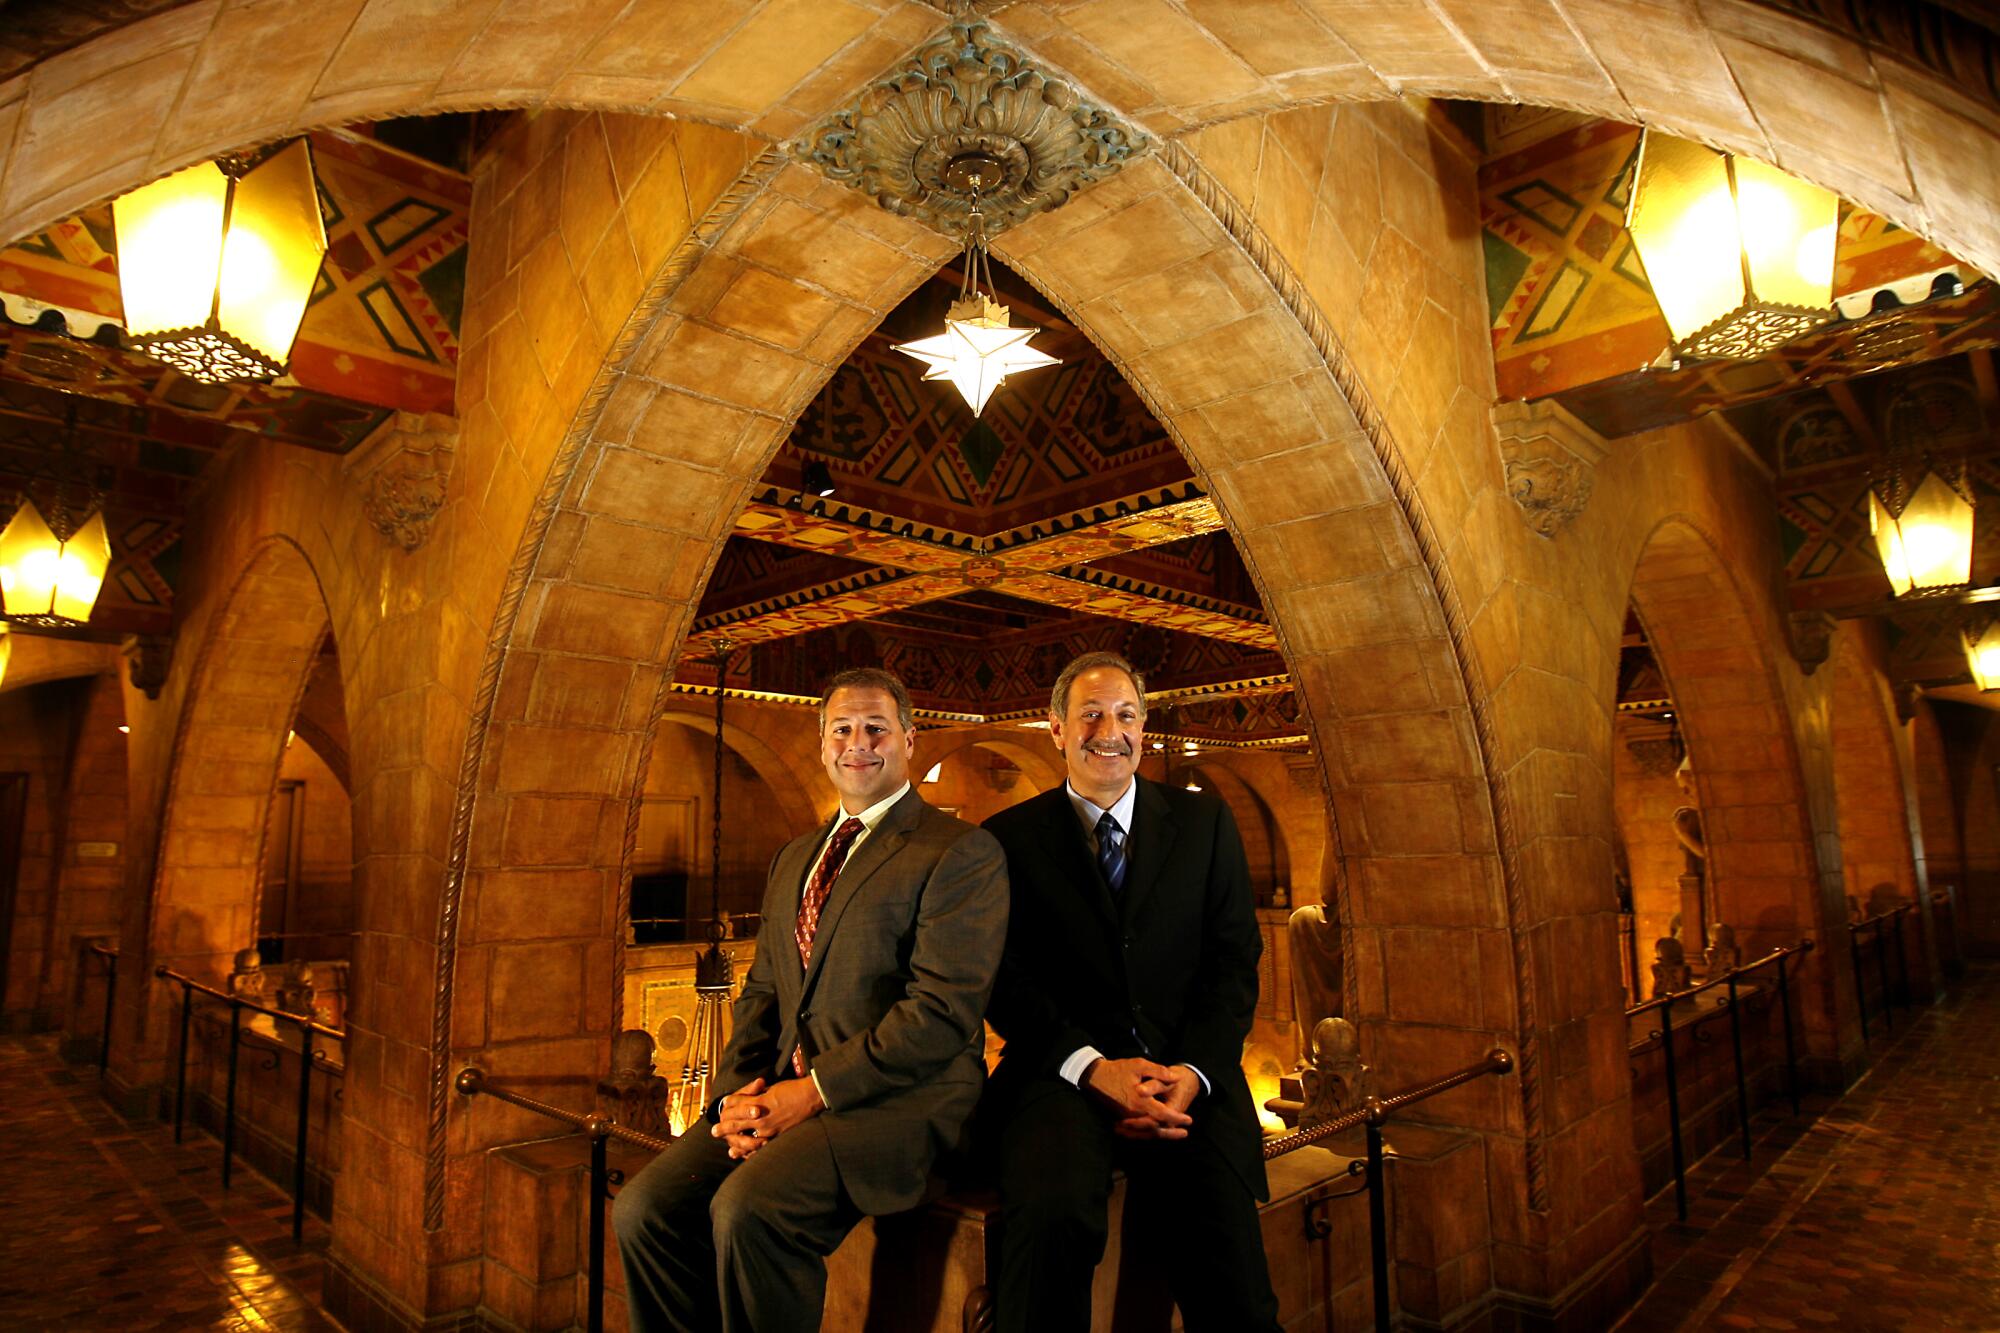 Two men sitting inside an ornate building.